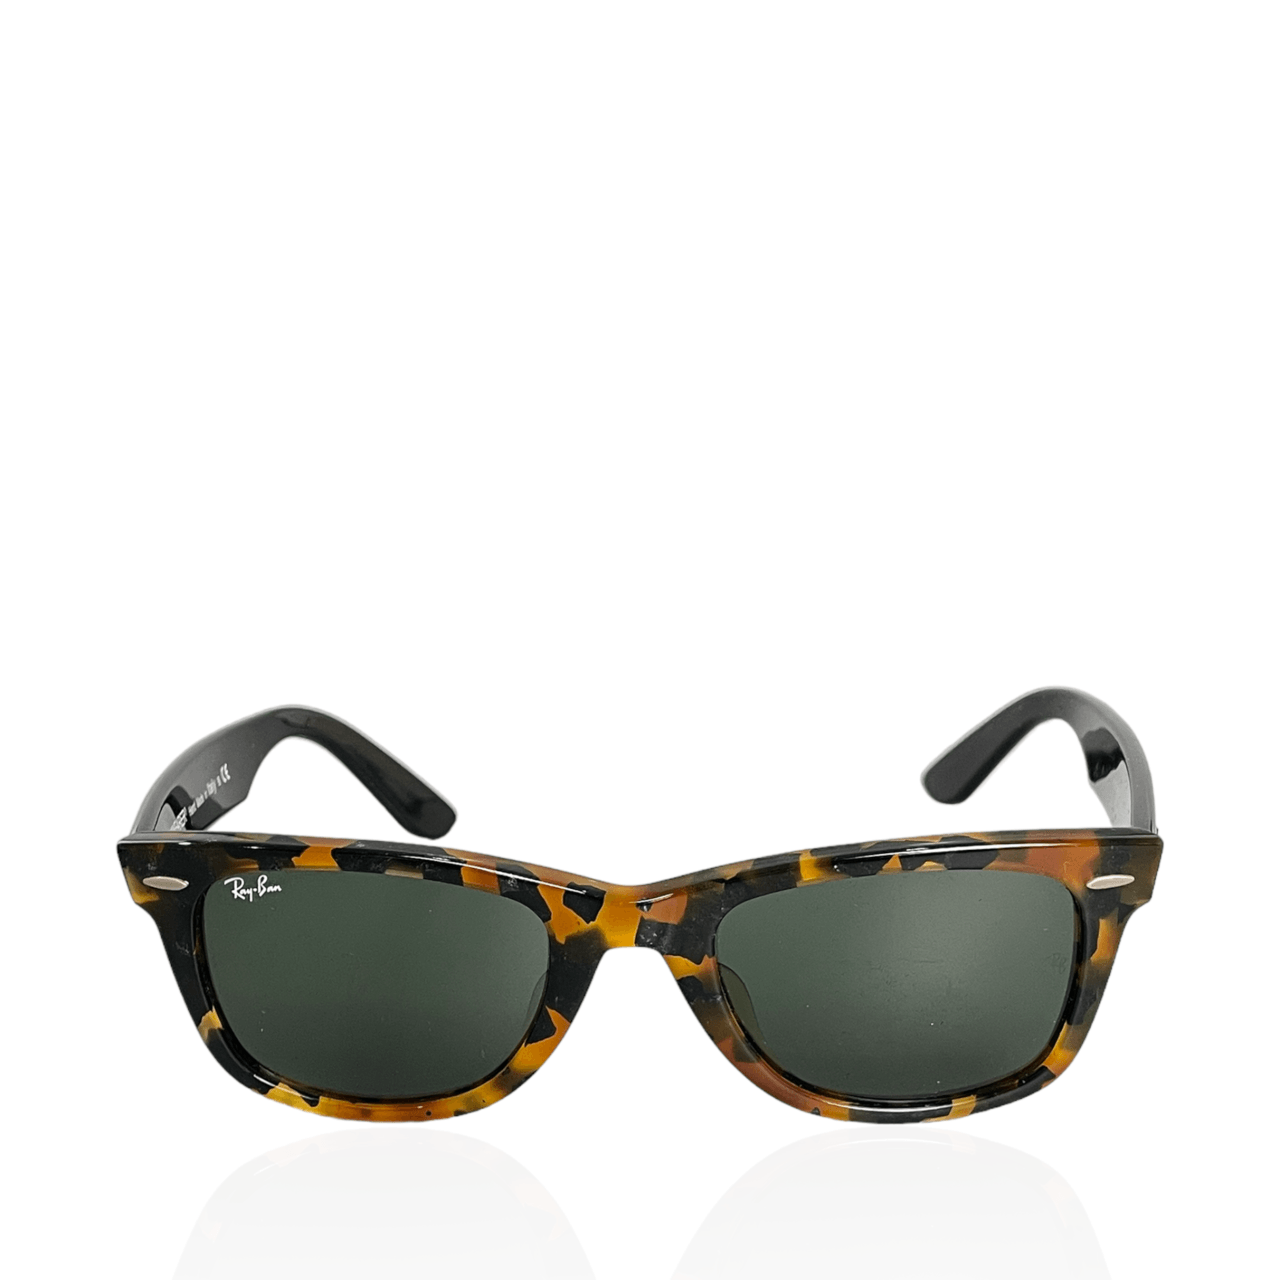 Ray-Ban Wayfarer Brown & Black Sunglasses